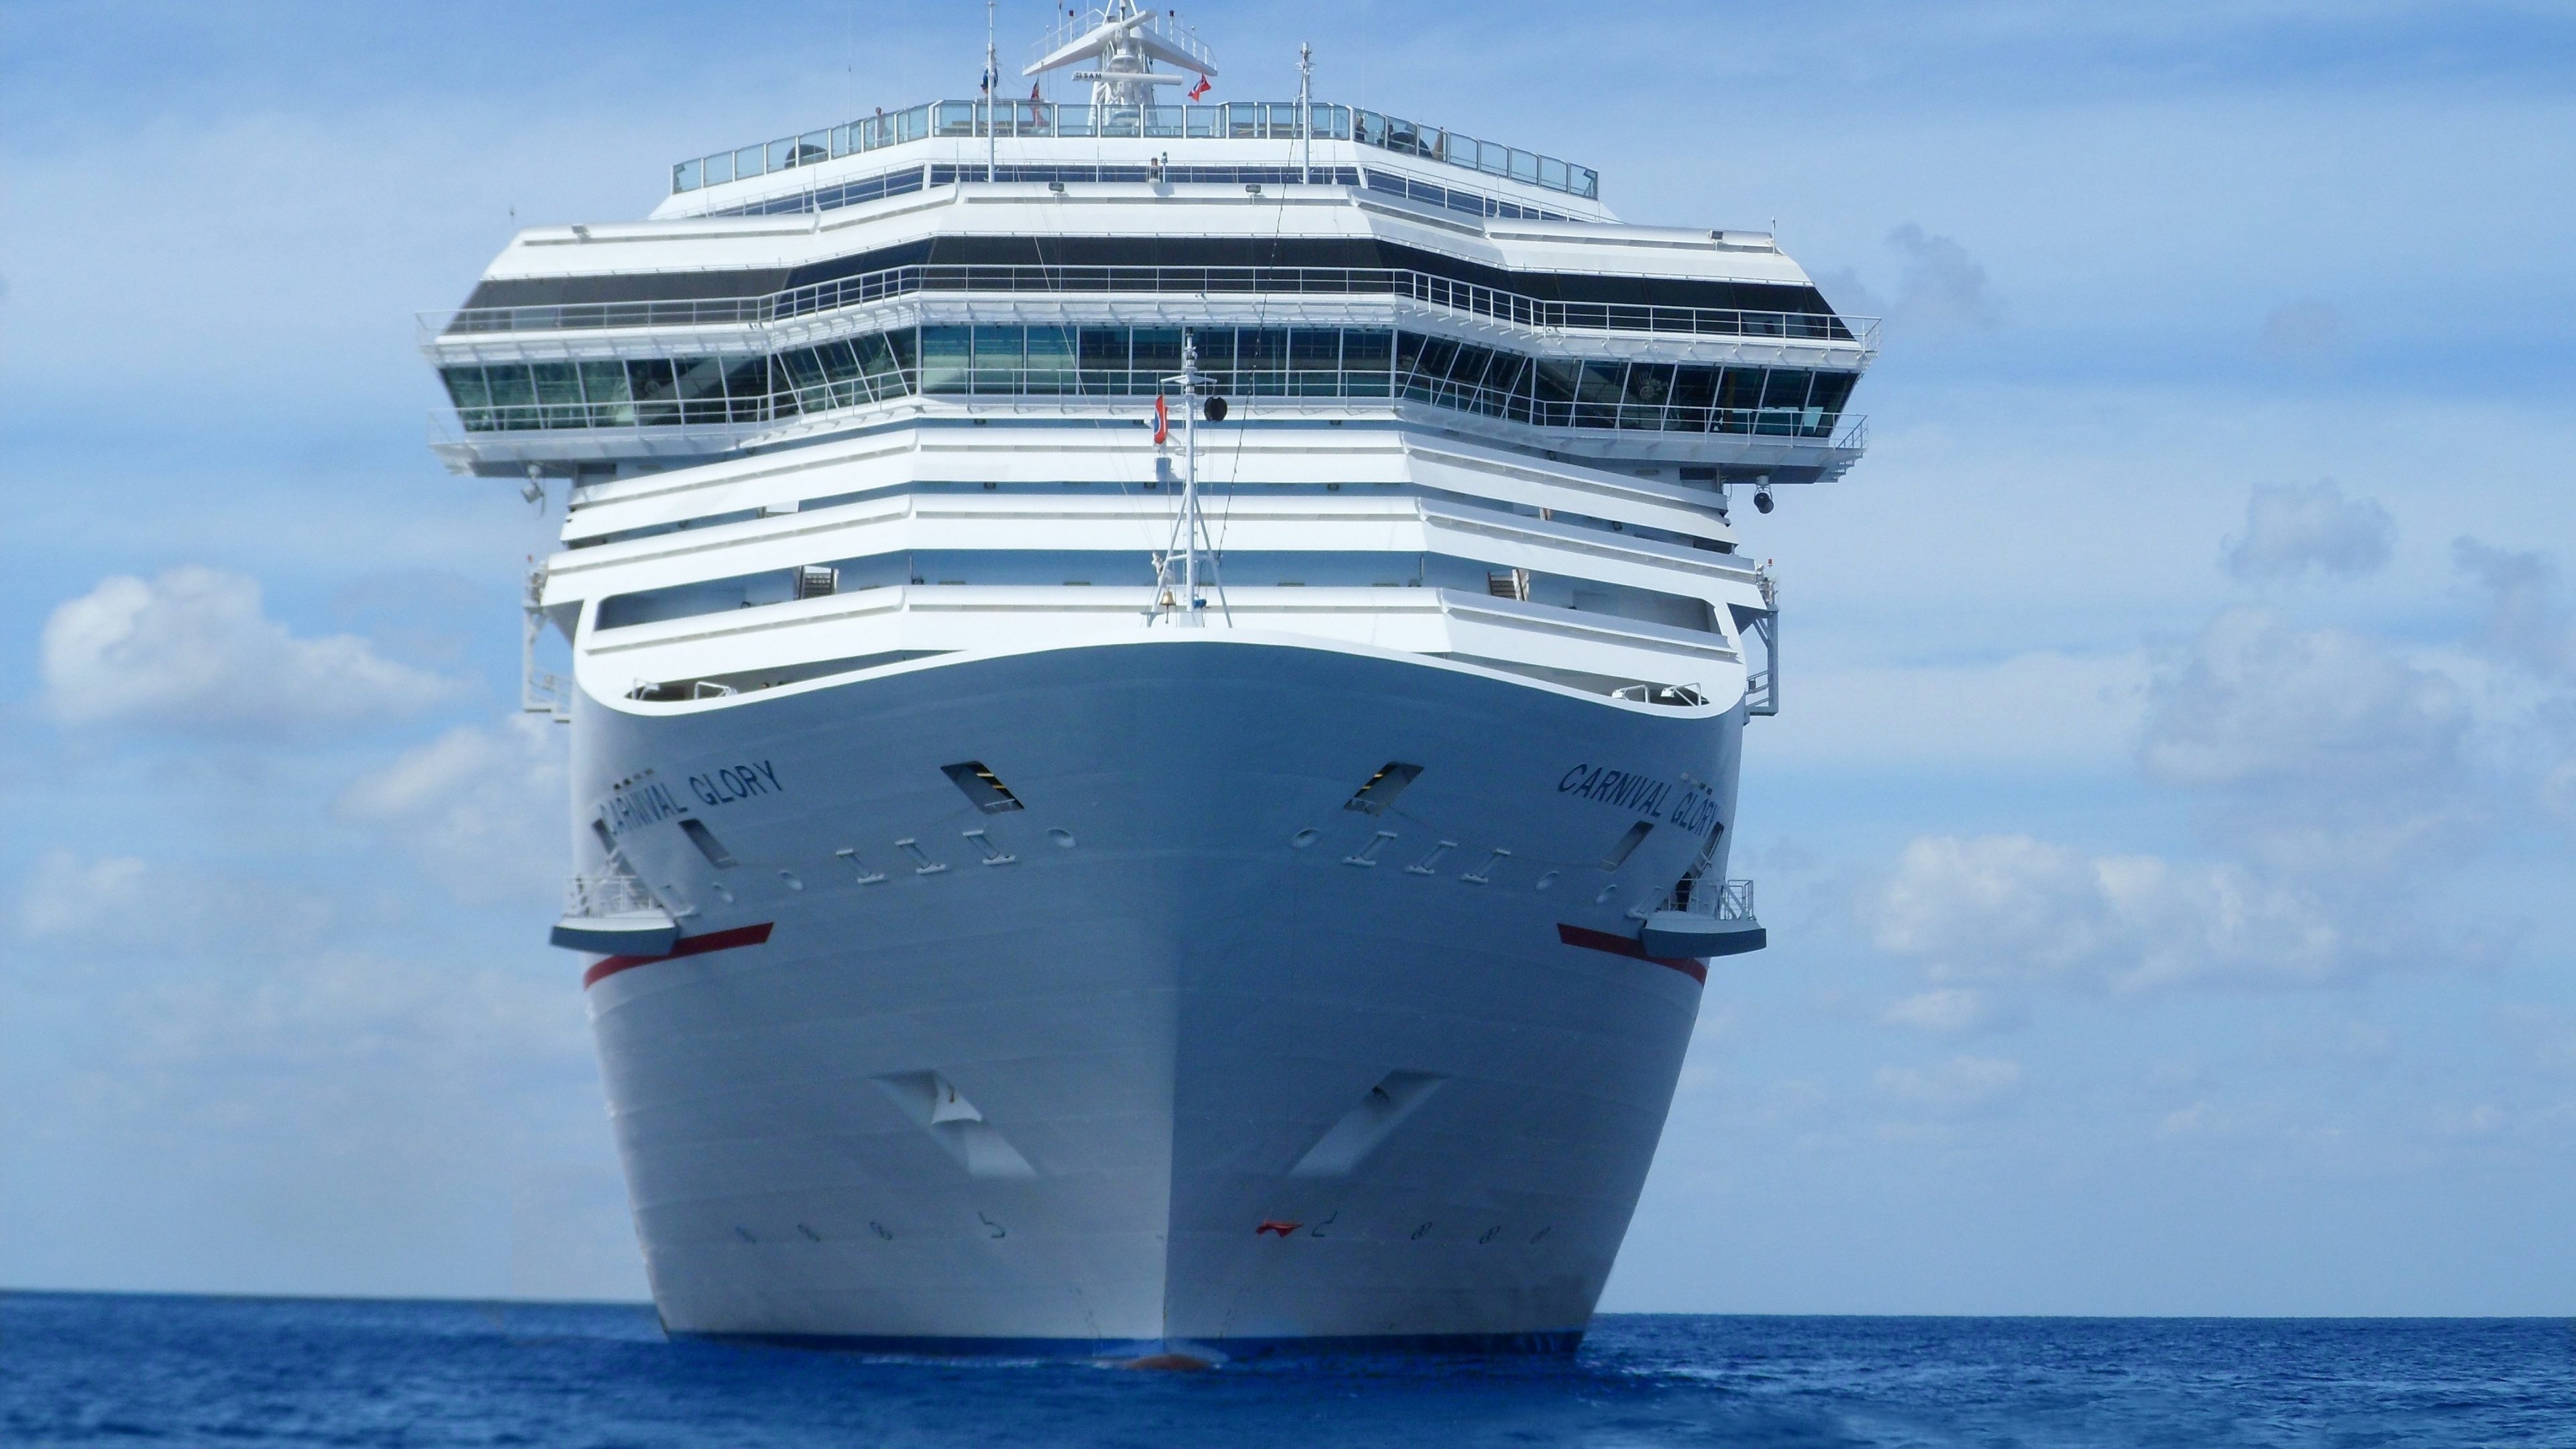 Cruiser (Ship): Carnival Glory, A Conquest-class cruise liner operated by Carnival Cruise Line. 3840x2160 4K Wallpaper.